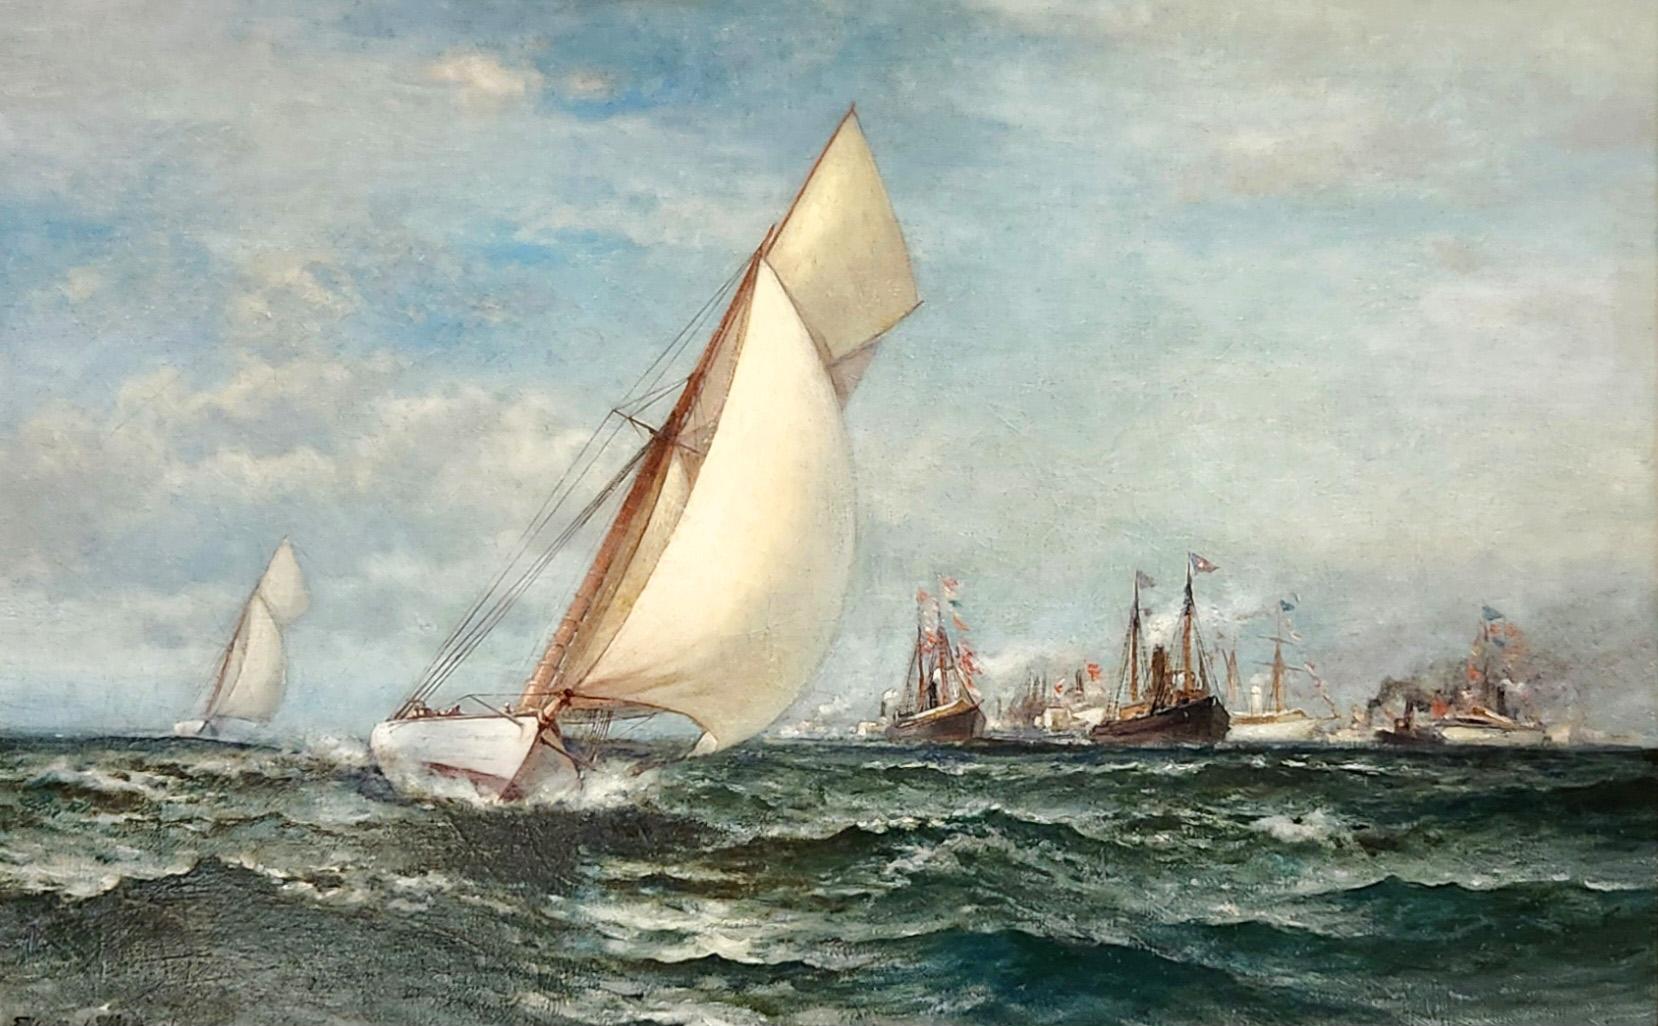 The Winning Yacht - Painting by Edward Moran